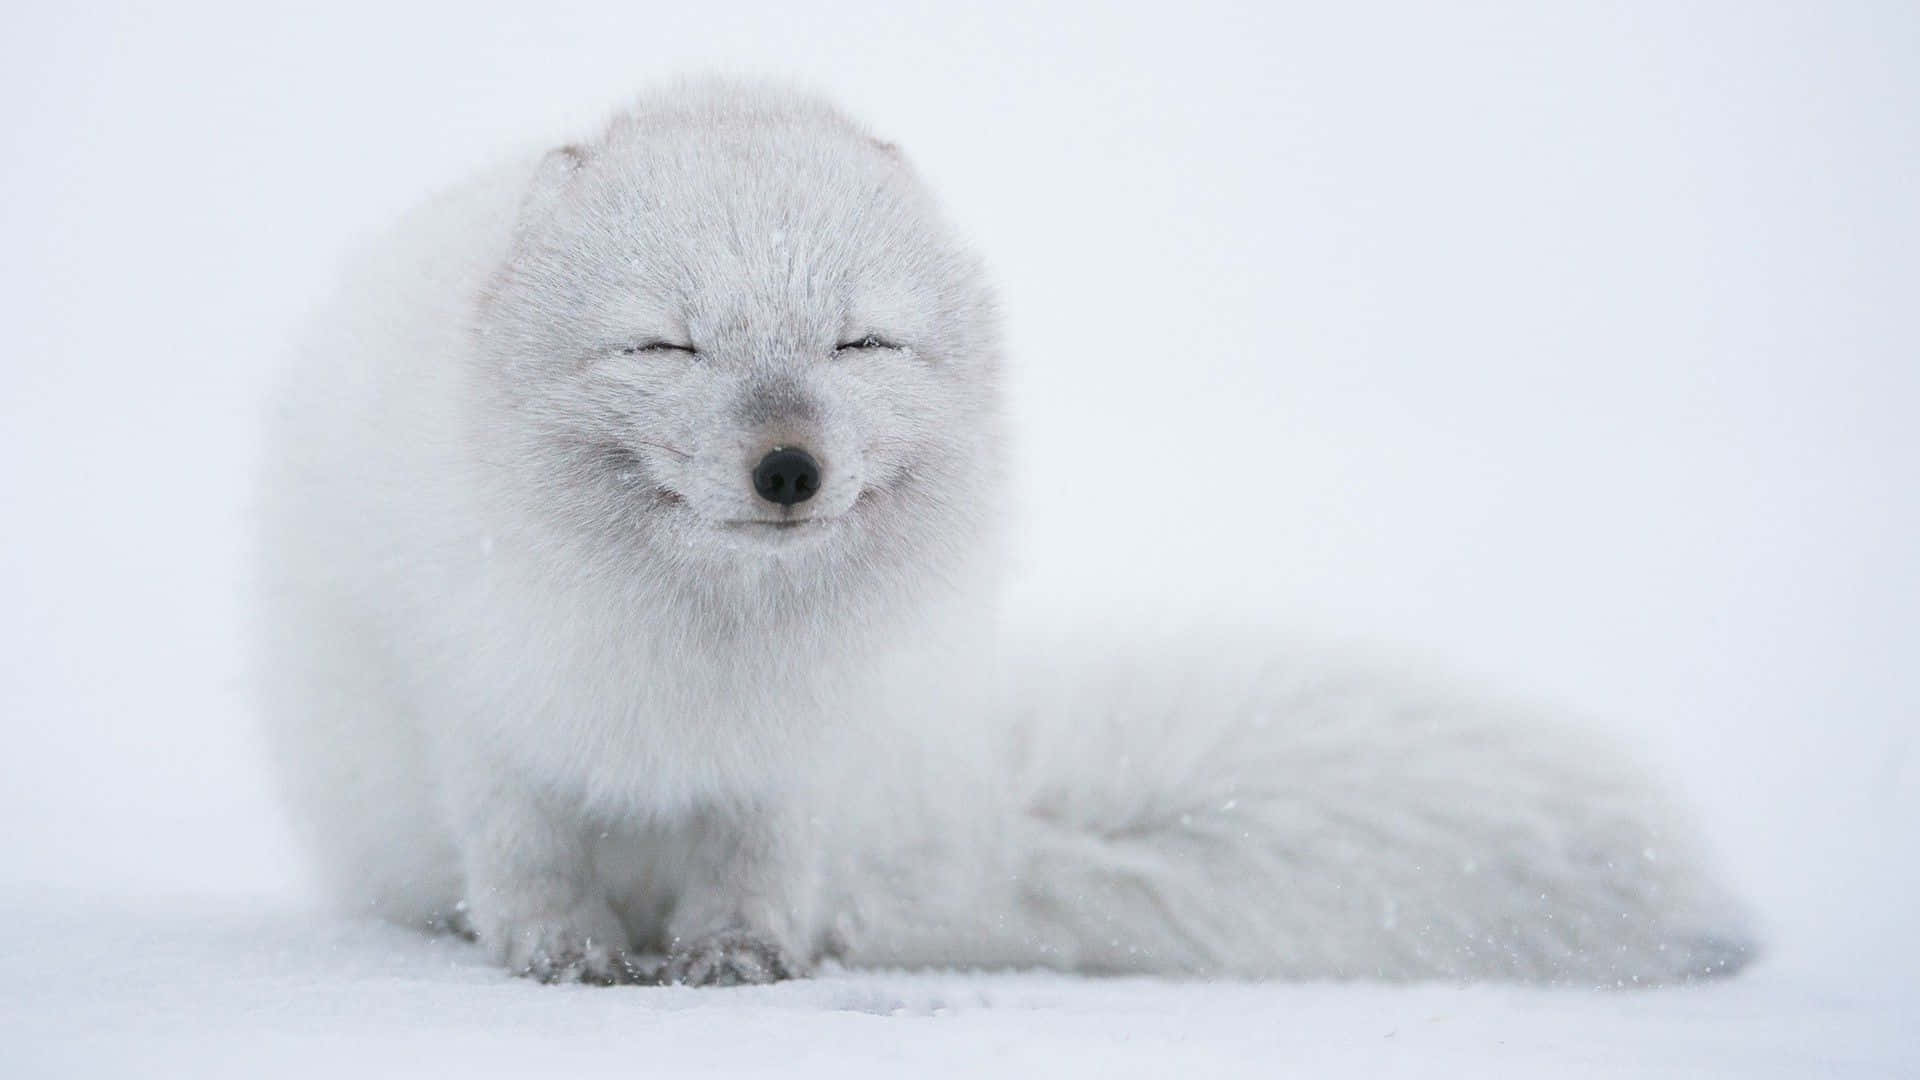 A Wild Arctic Fox Roams Among snow-covered Rocky Hills